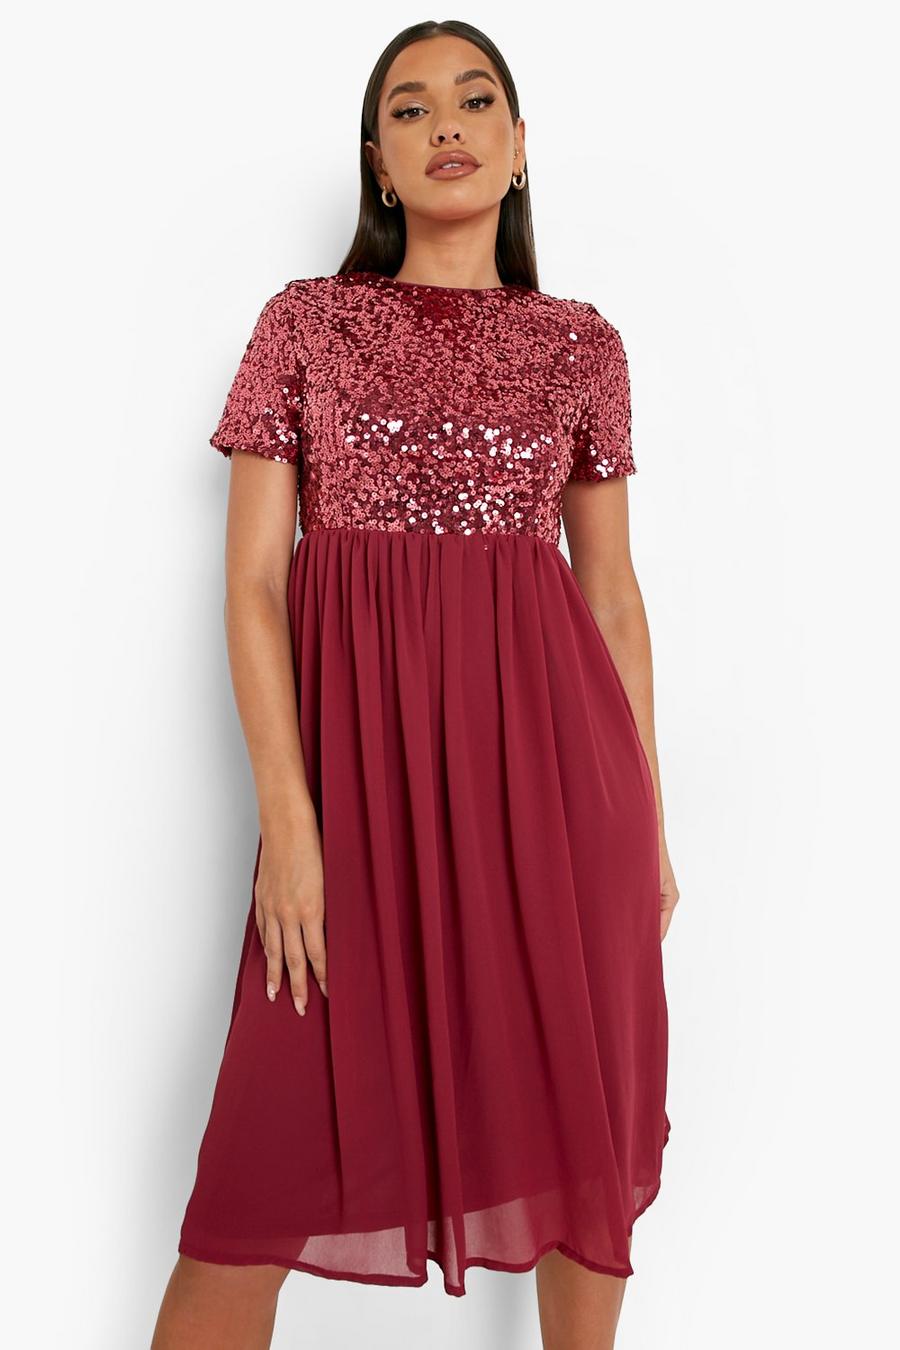 Berry red Sequin Top Short Sleeve Midi Dress